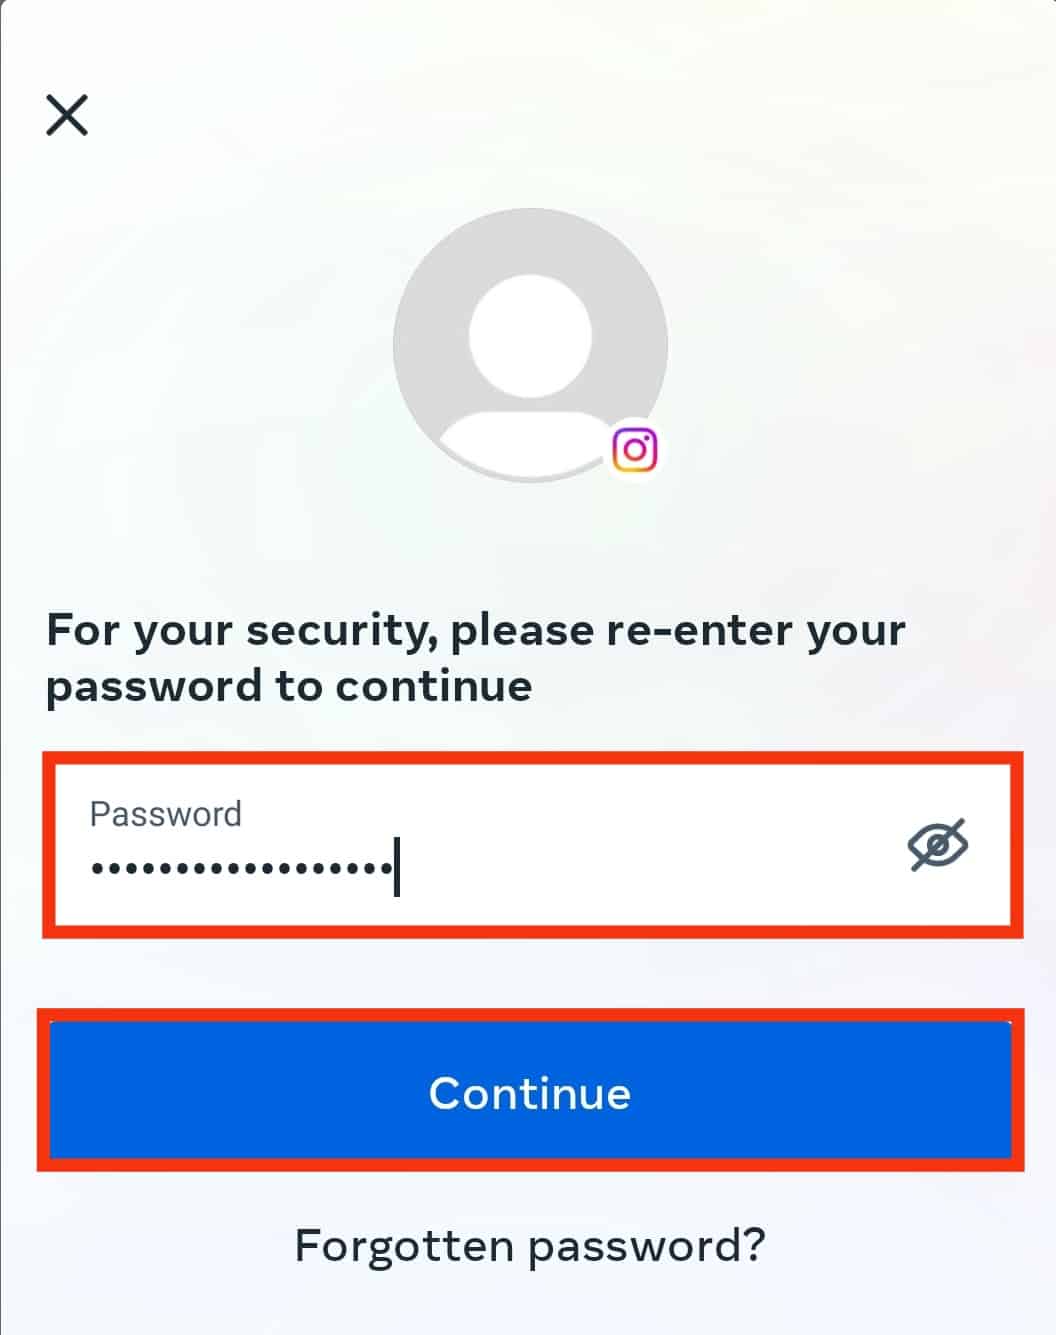 Enter Your Password